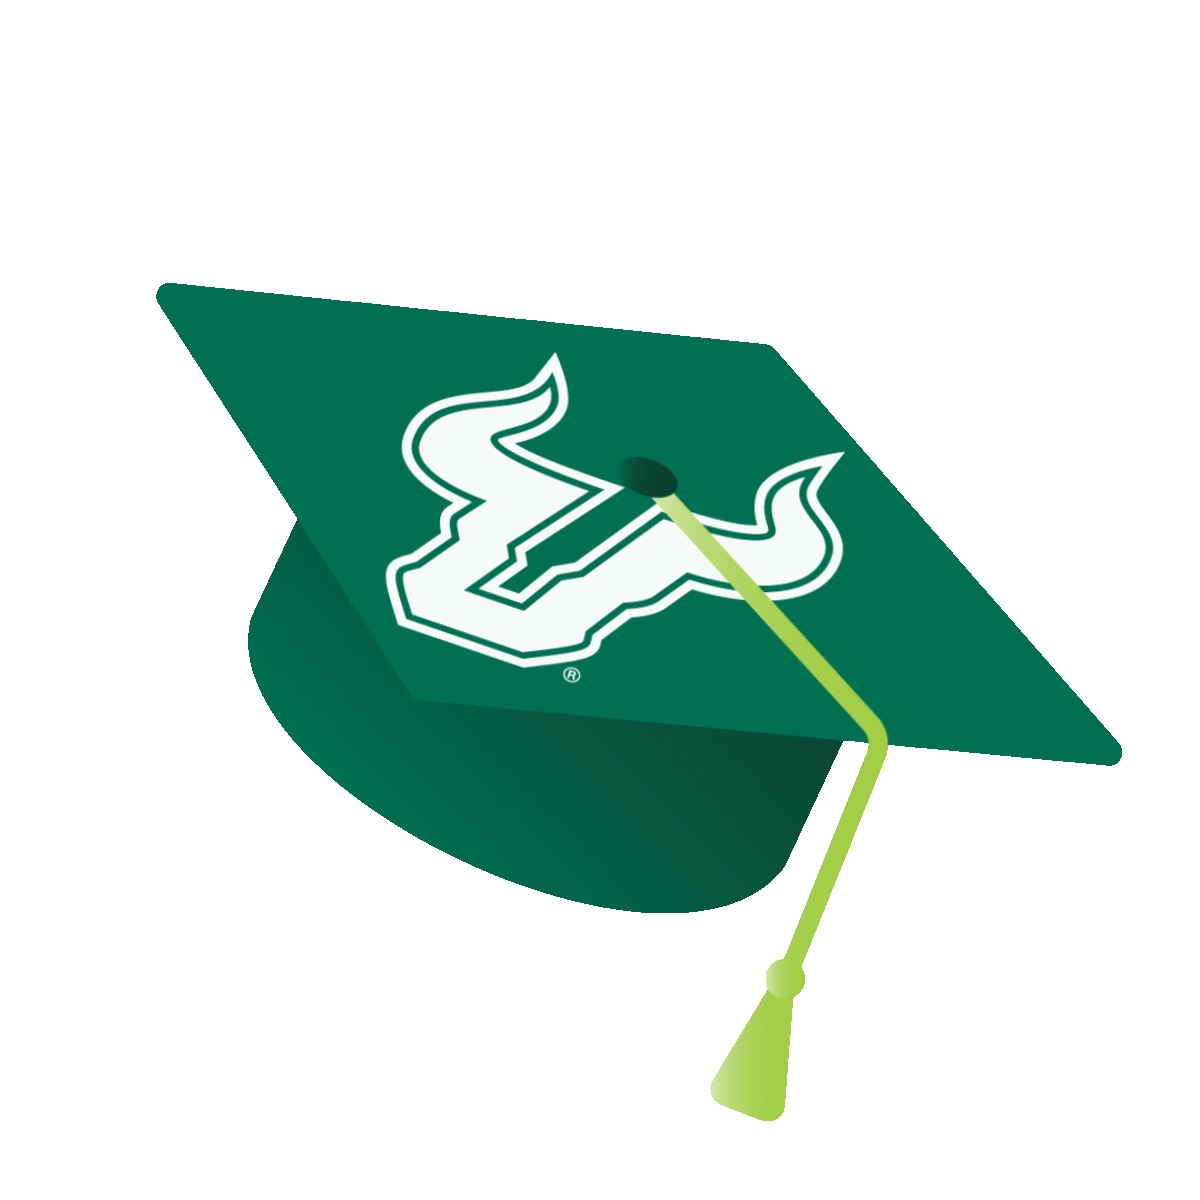 USF green graduation cap with gold tassle